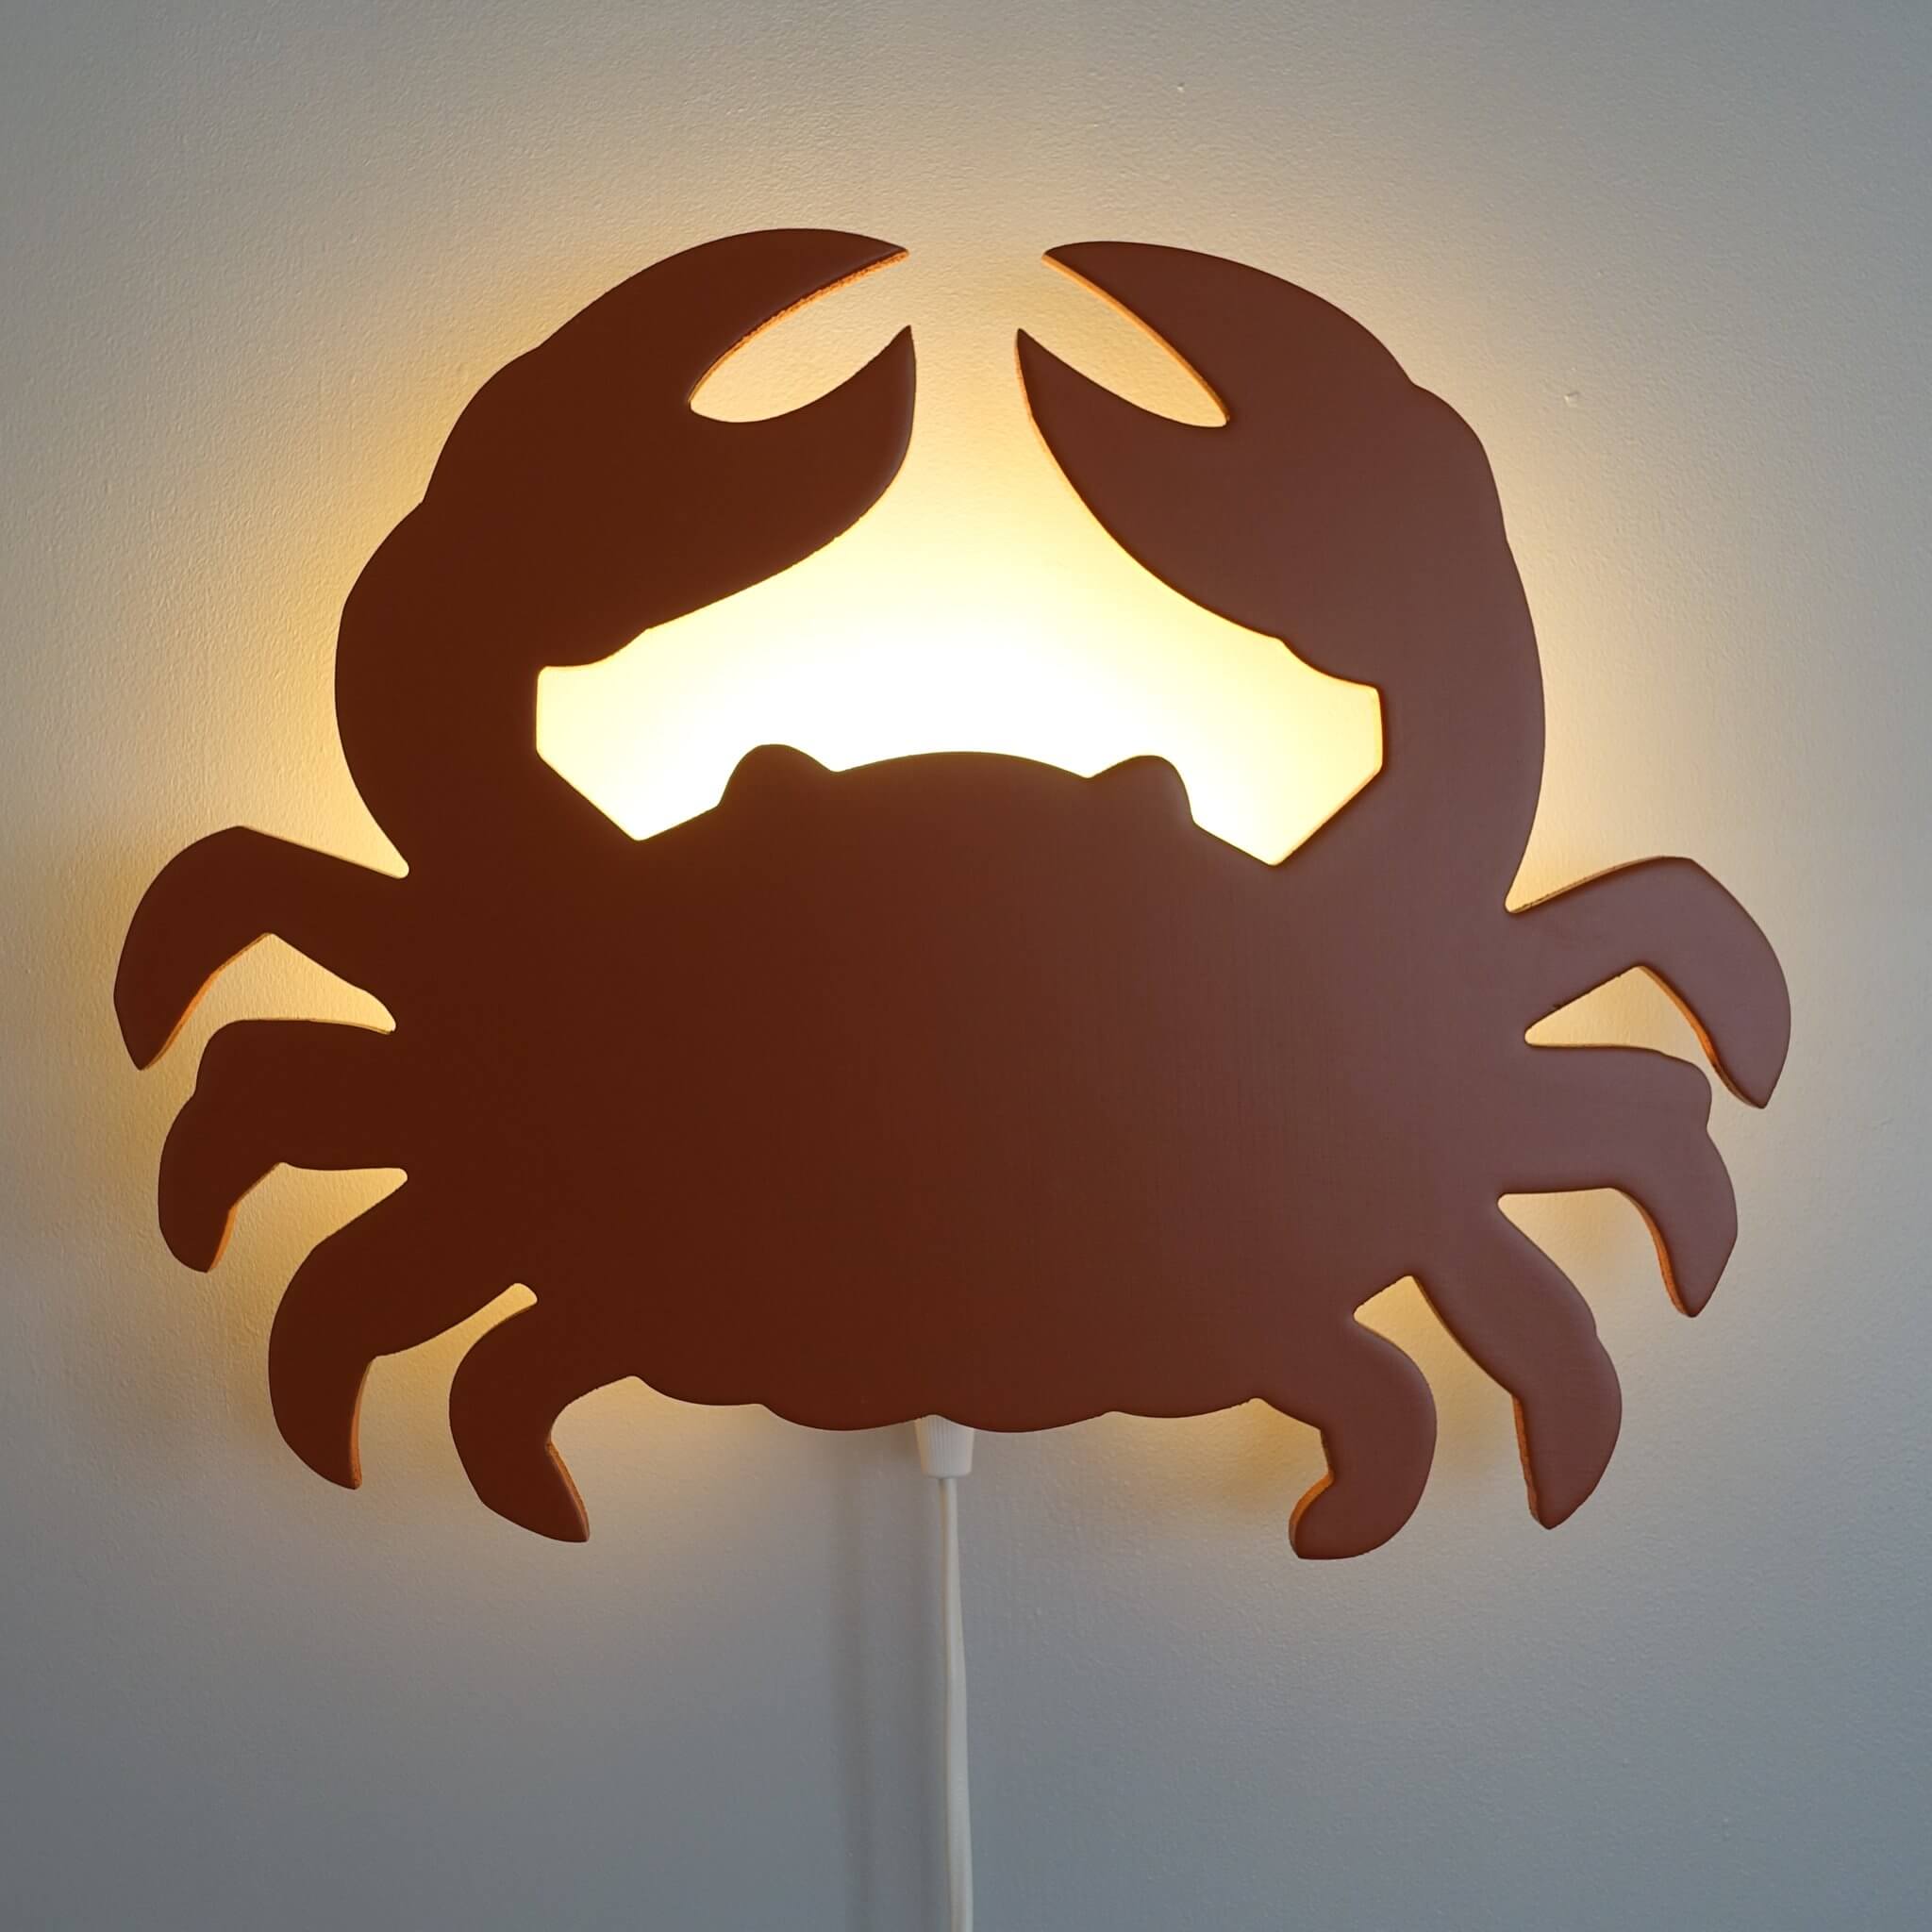 Houten wandlamp kinderkamer | krab baksteen rood - toddie.nl